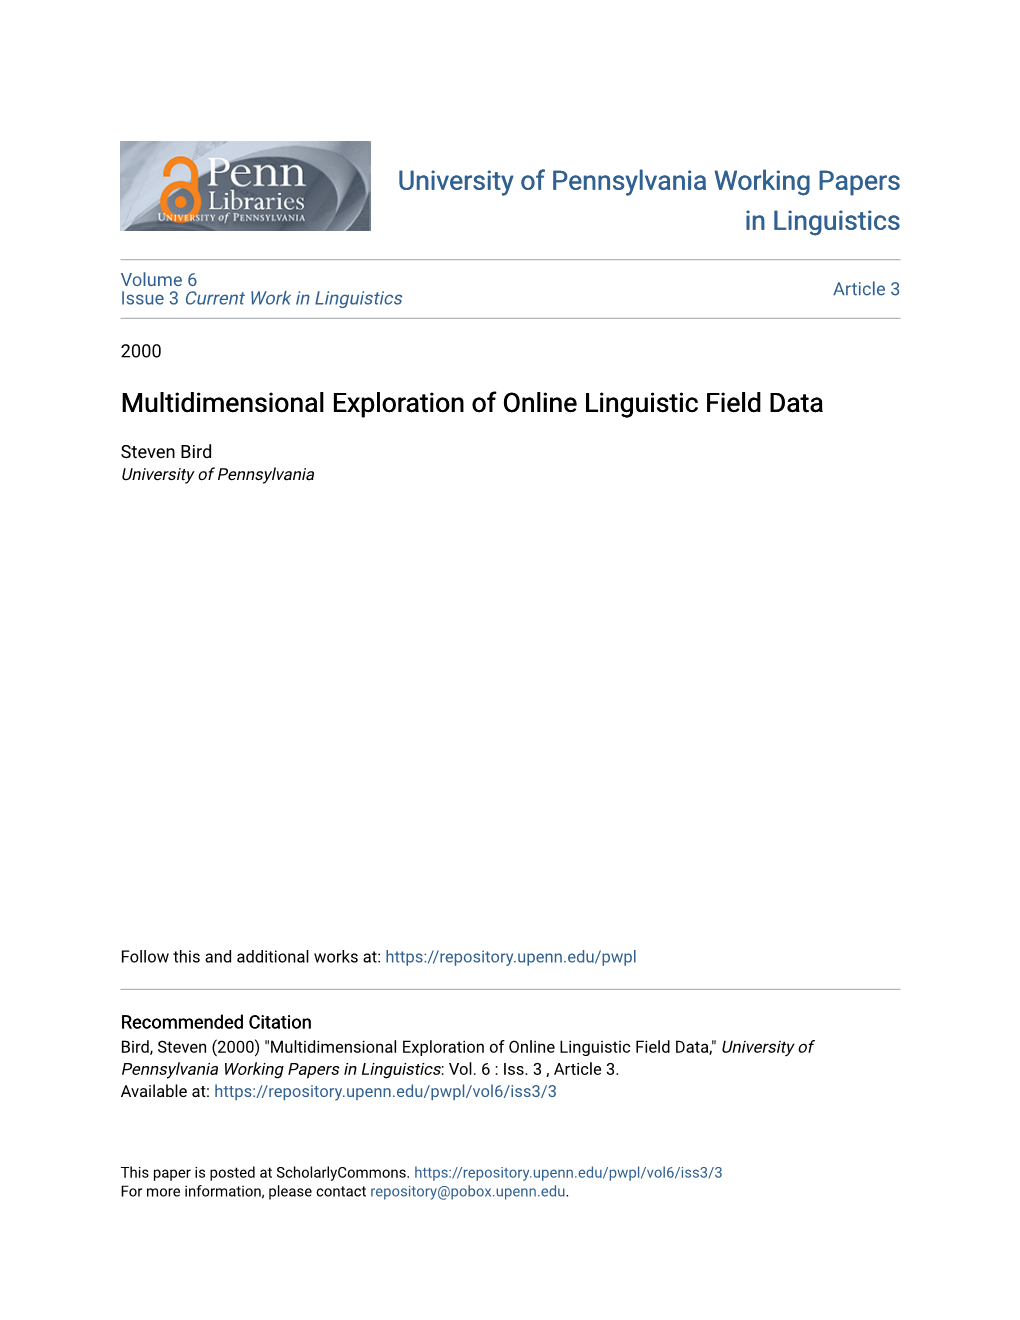 Multidimensional Exploration of Online Linguistic Field Data